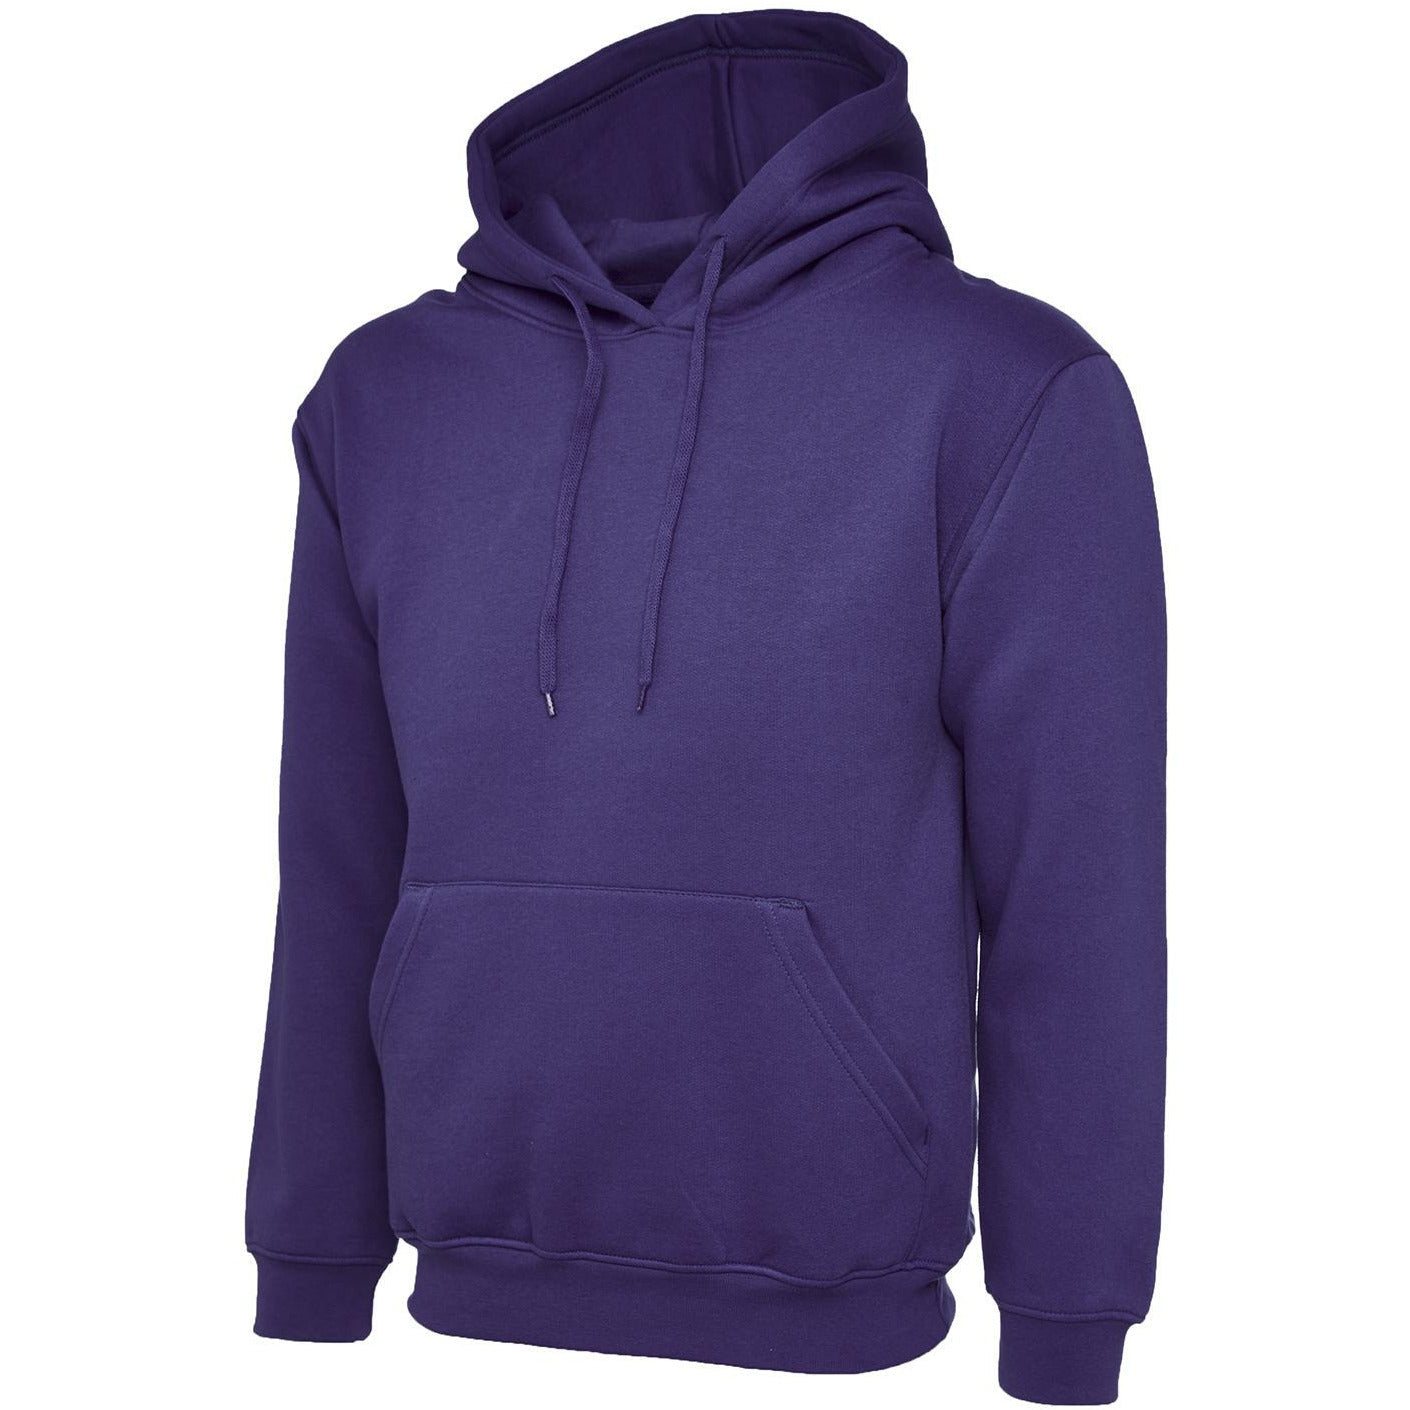 Olympic Hooded Sweatshirt Purple